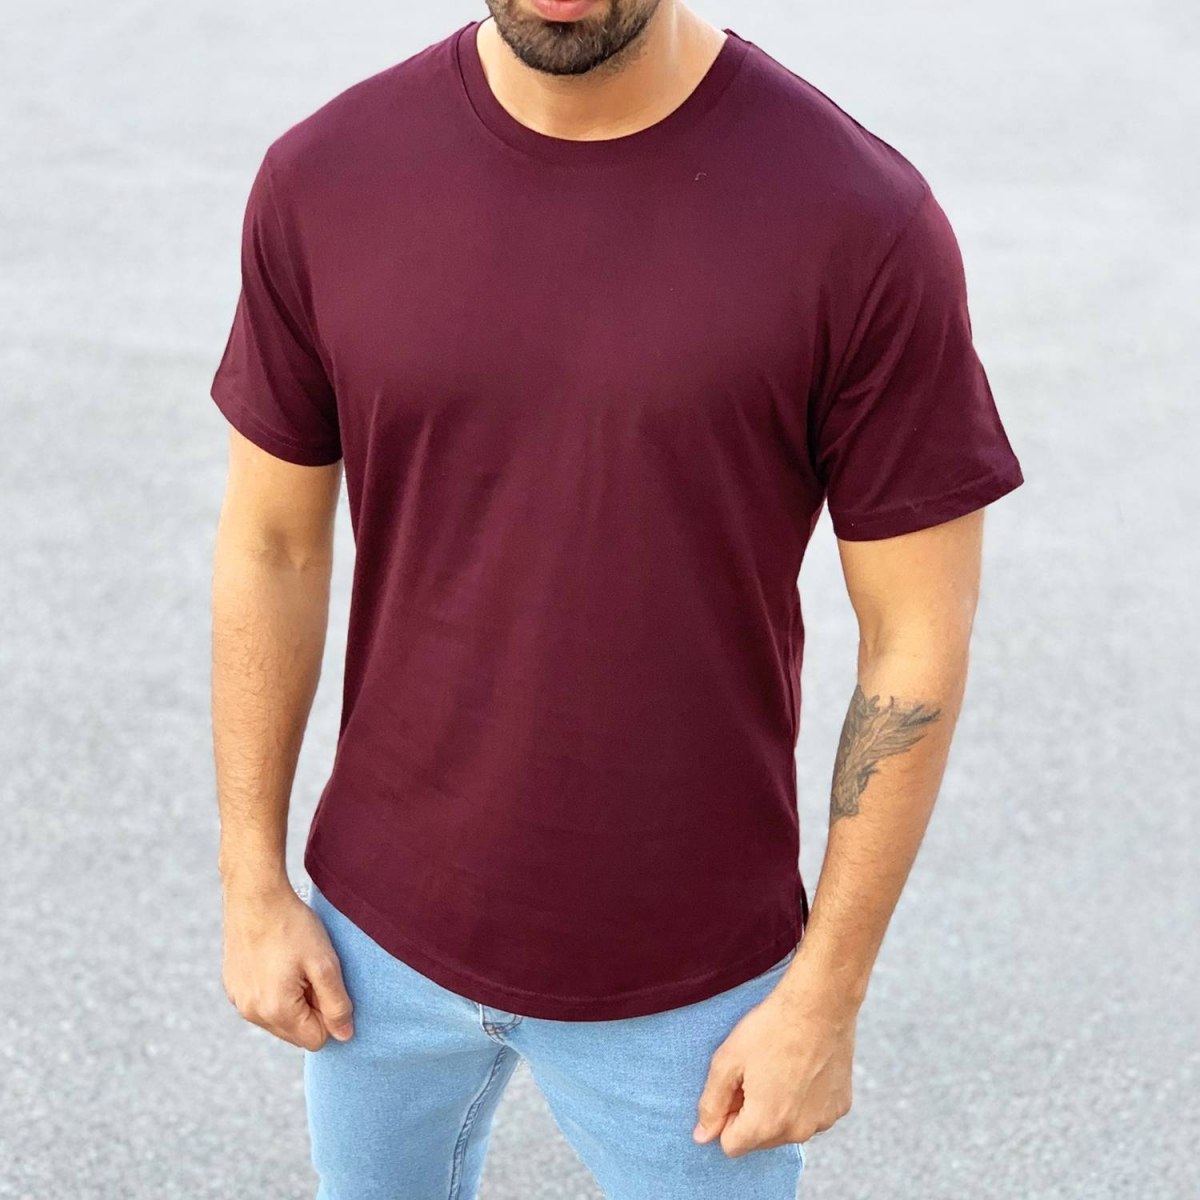 Men's Basic Round Neck T-Shirt In Claret Red